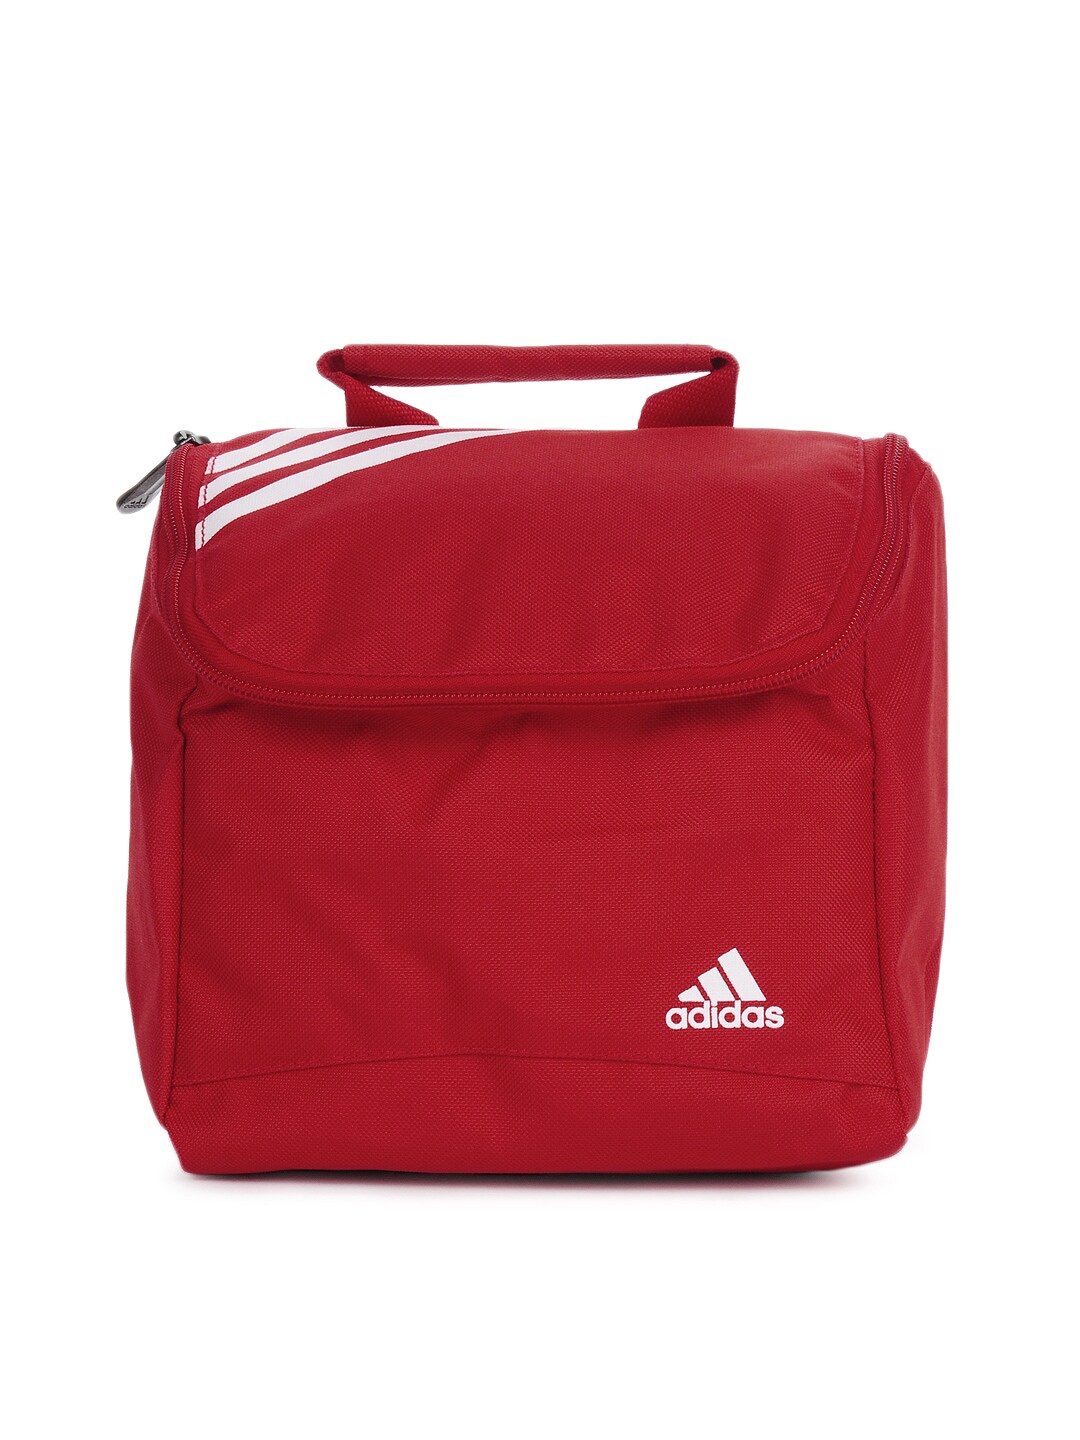 ADIDAS Unisex Red Organizer Bag